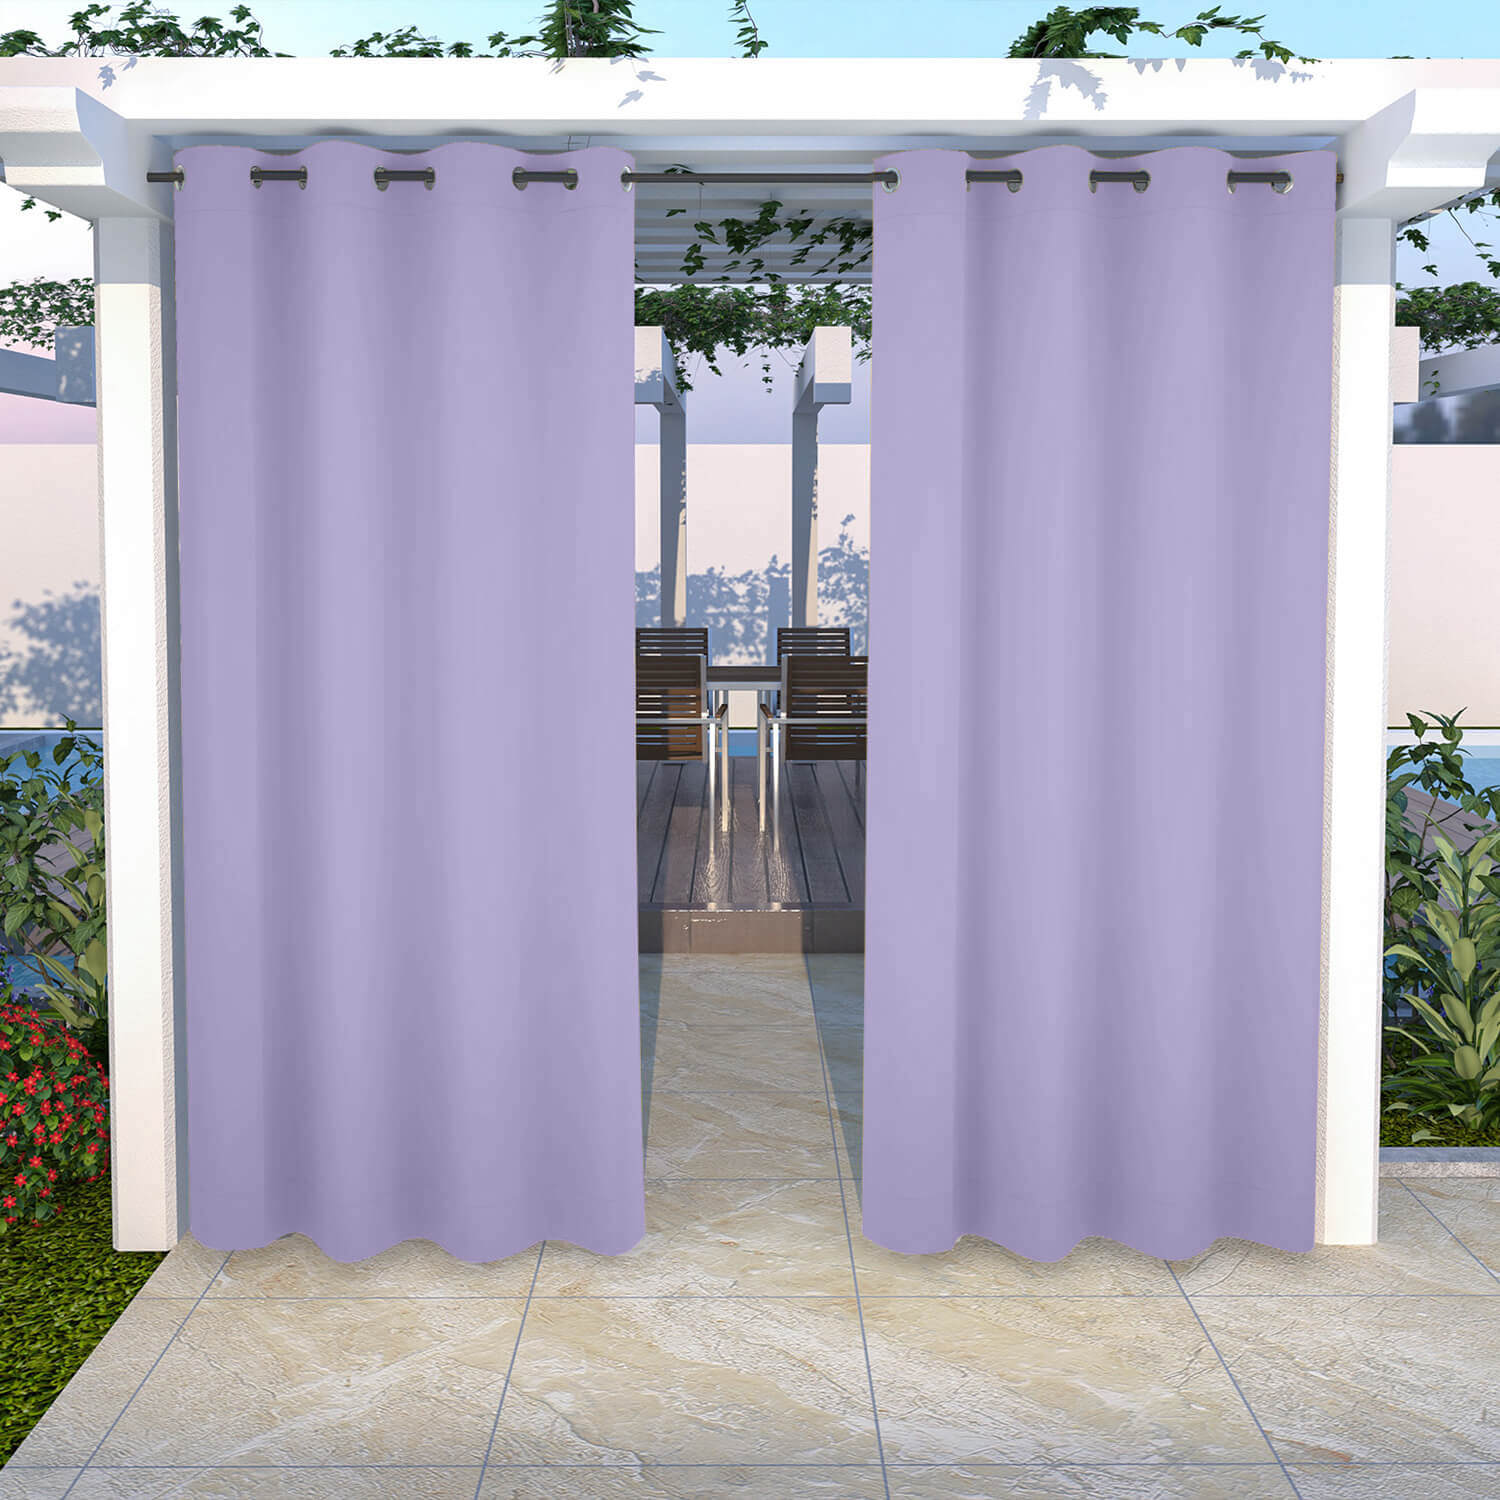 Snowcity Outdoor Curtains Waterproof Grommet Top 1 Panel - Purple